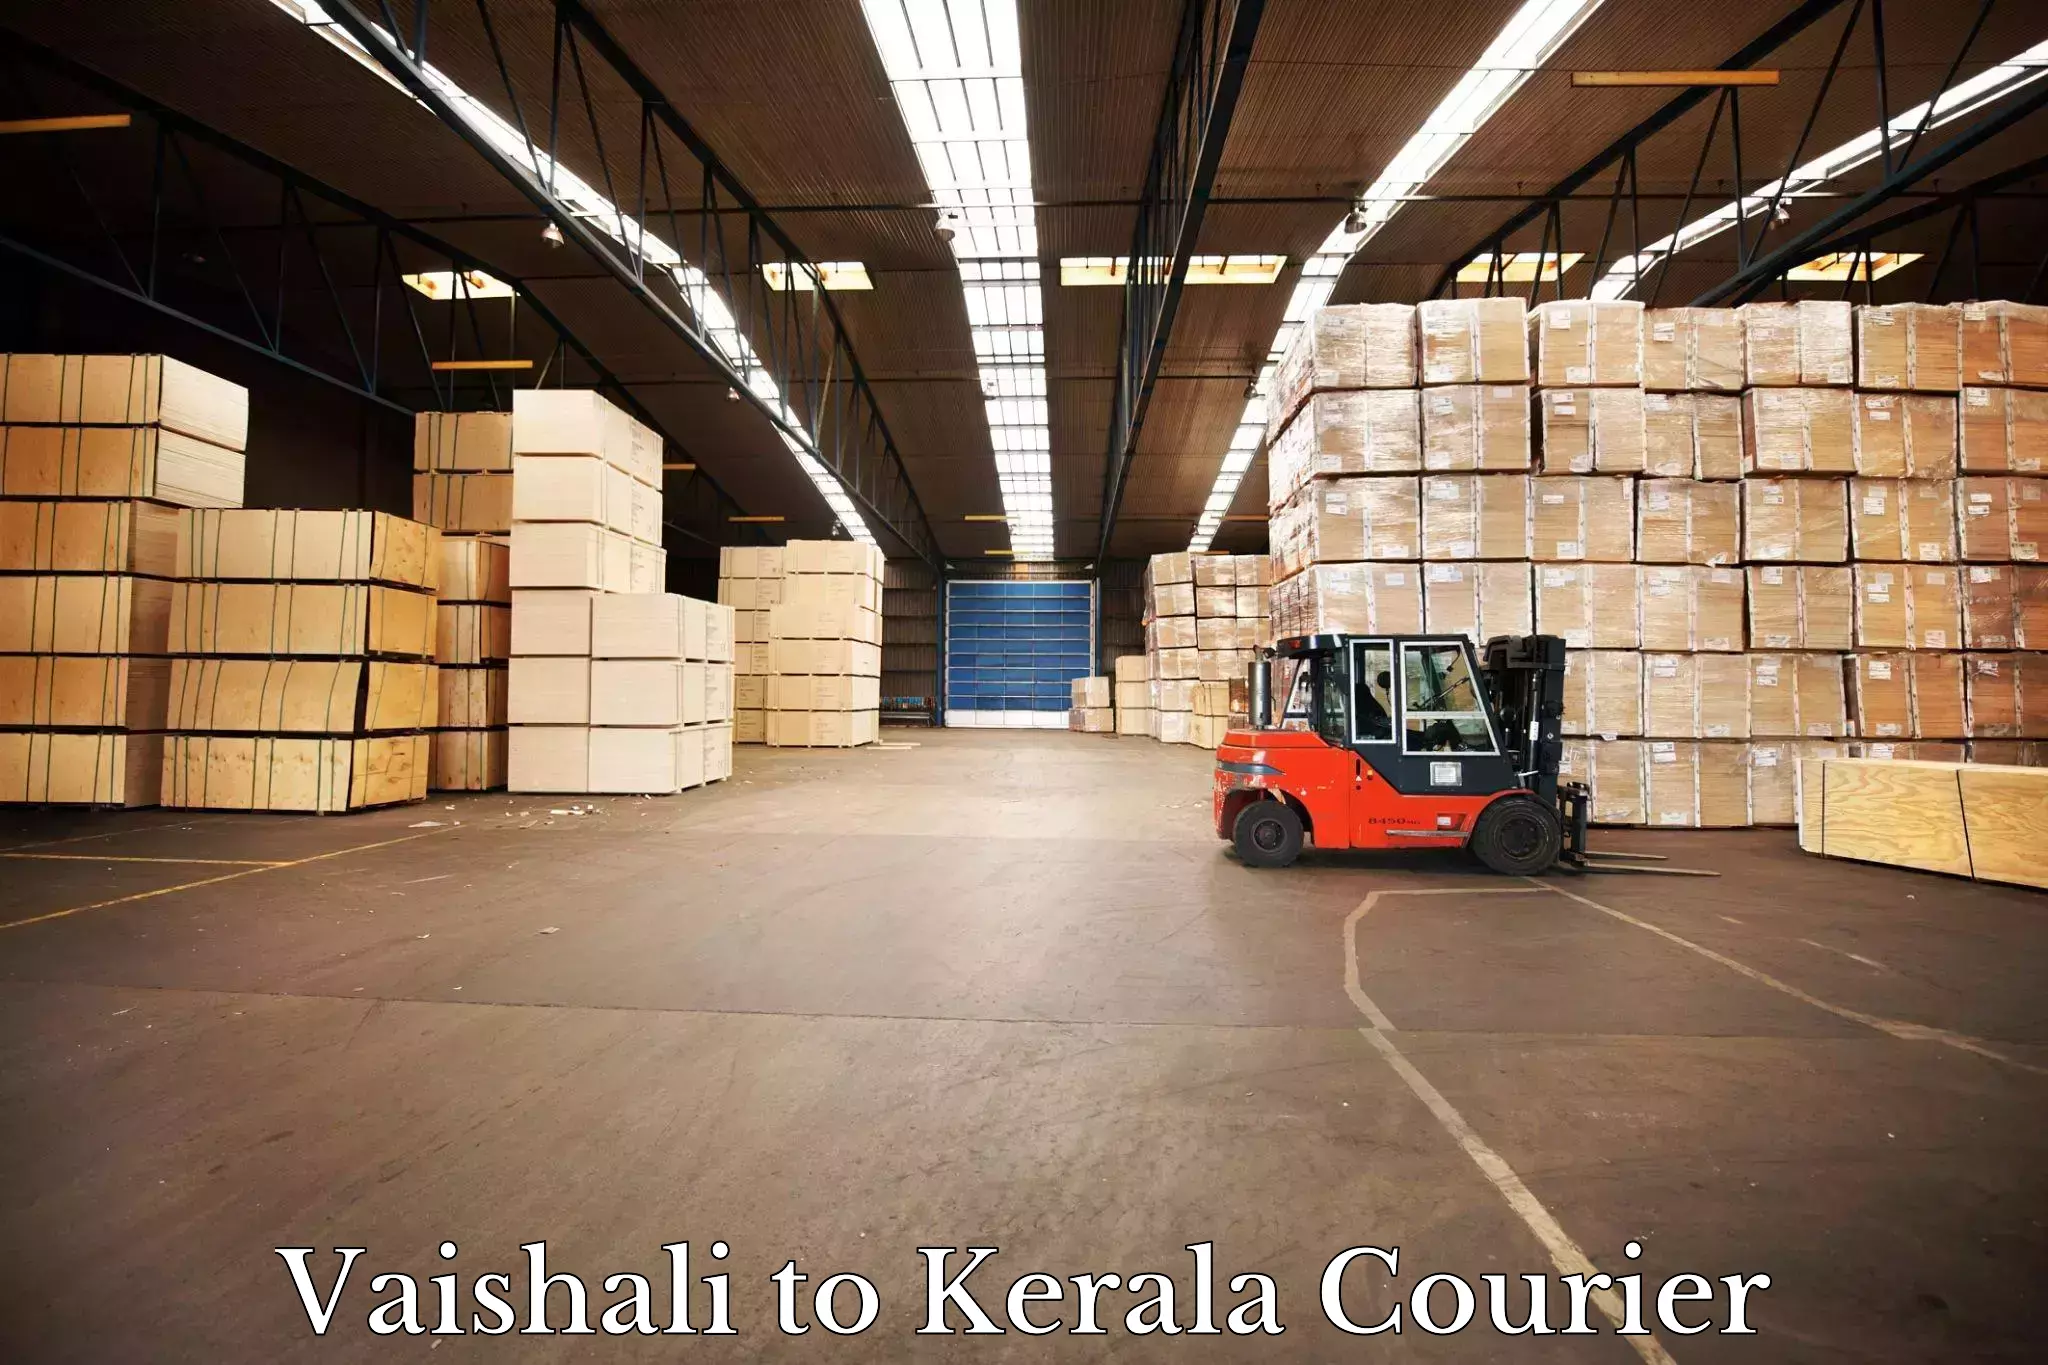 State-of-the-art courier technology Vaishali to Kazhakkoottam